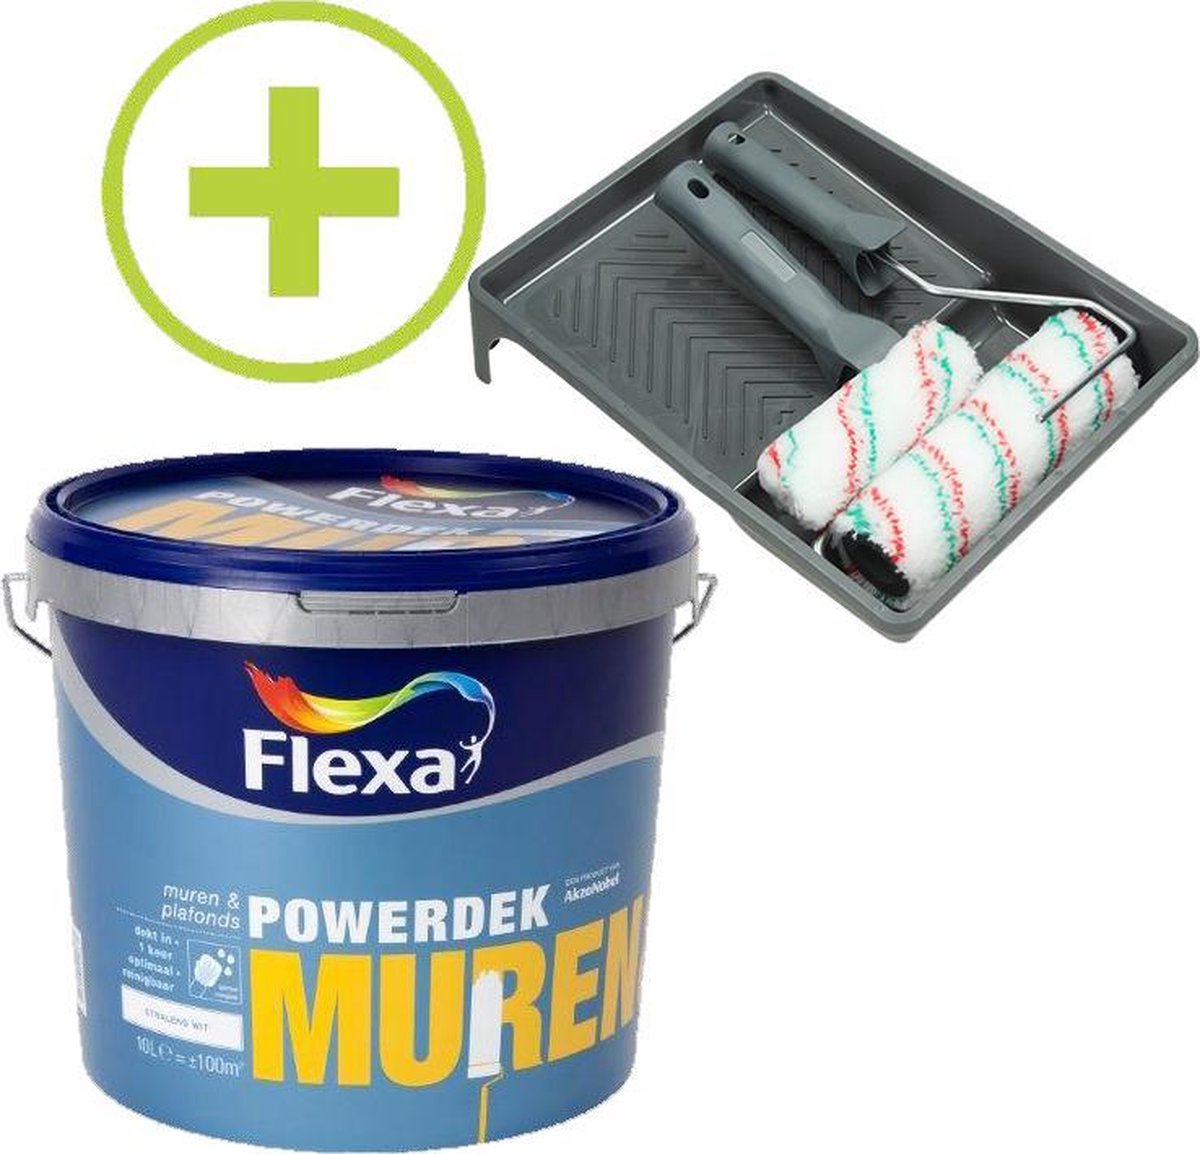 Flexa Powerdek Muurverf - Muren & Plafonds - Binnen - Stralend Wit - 10 L + Muurverfset 5-delig